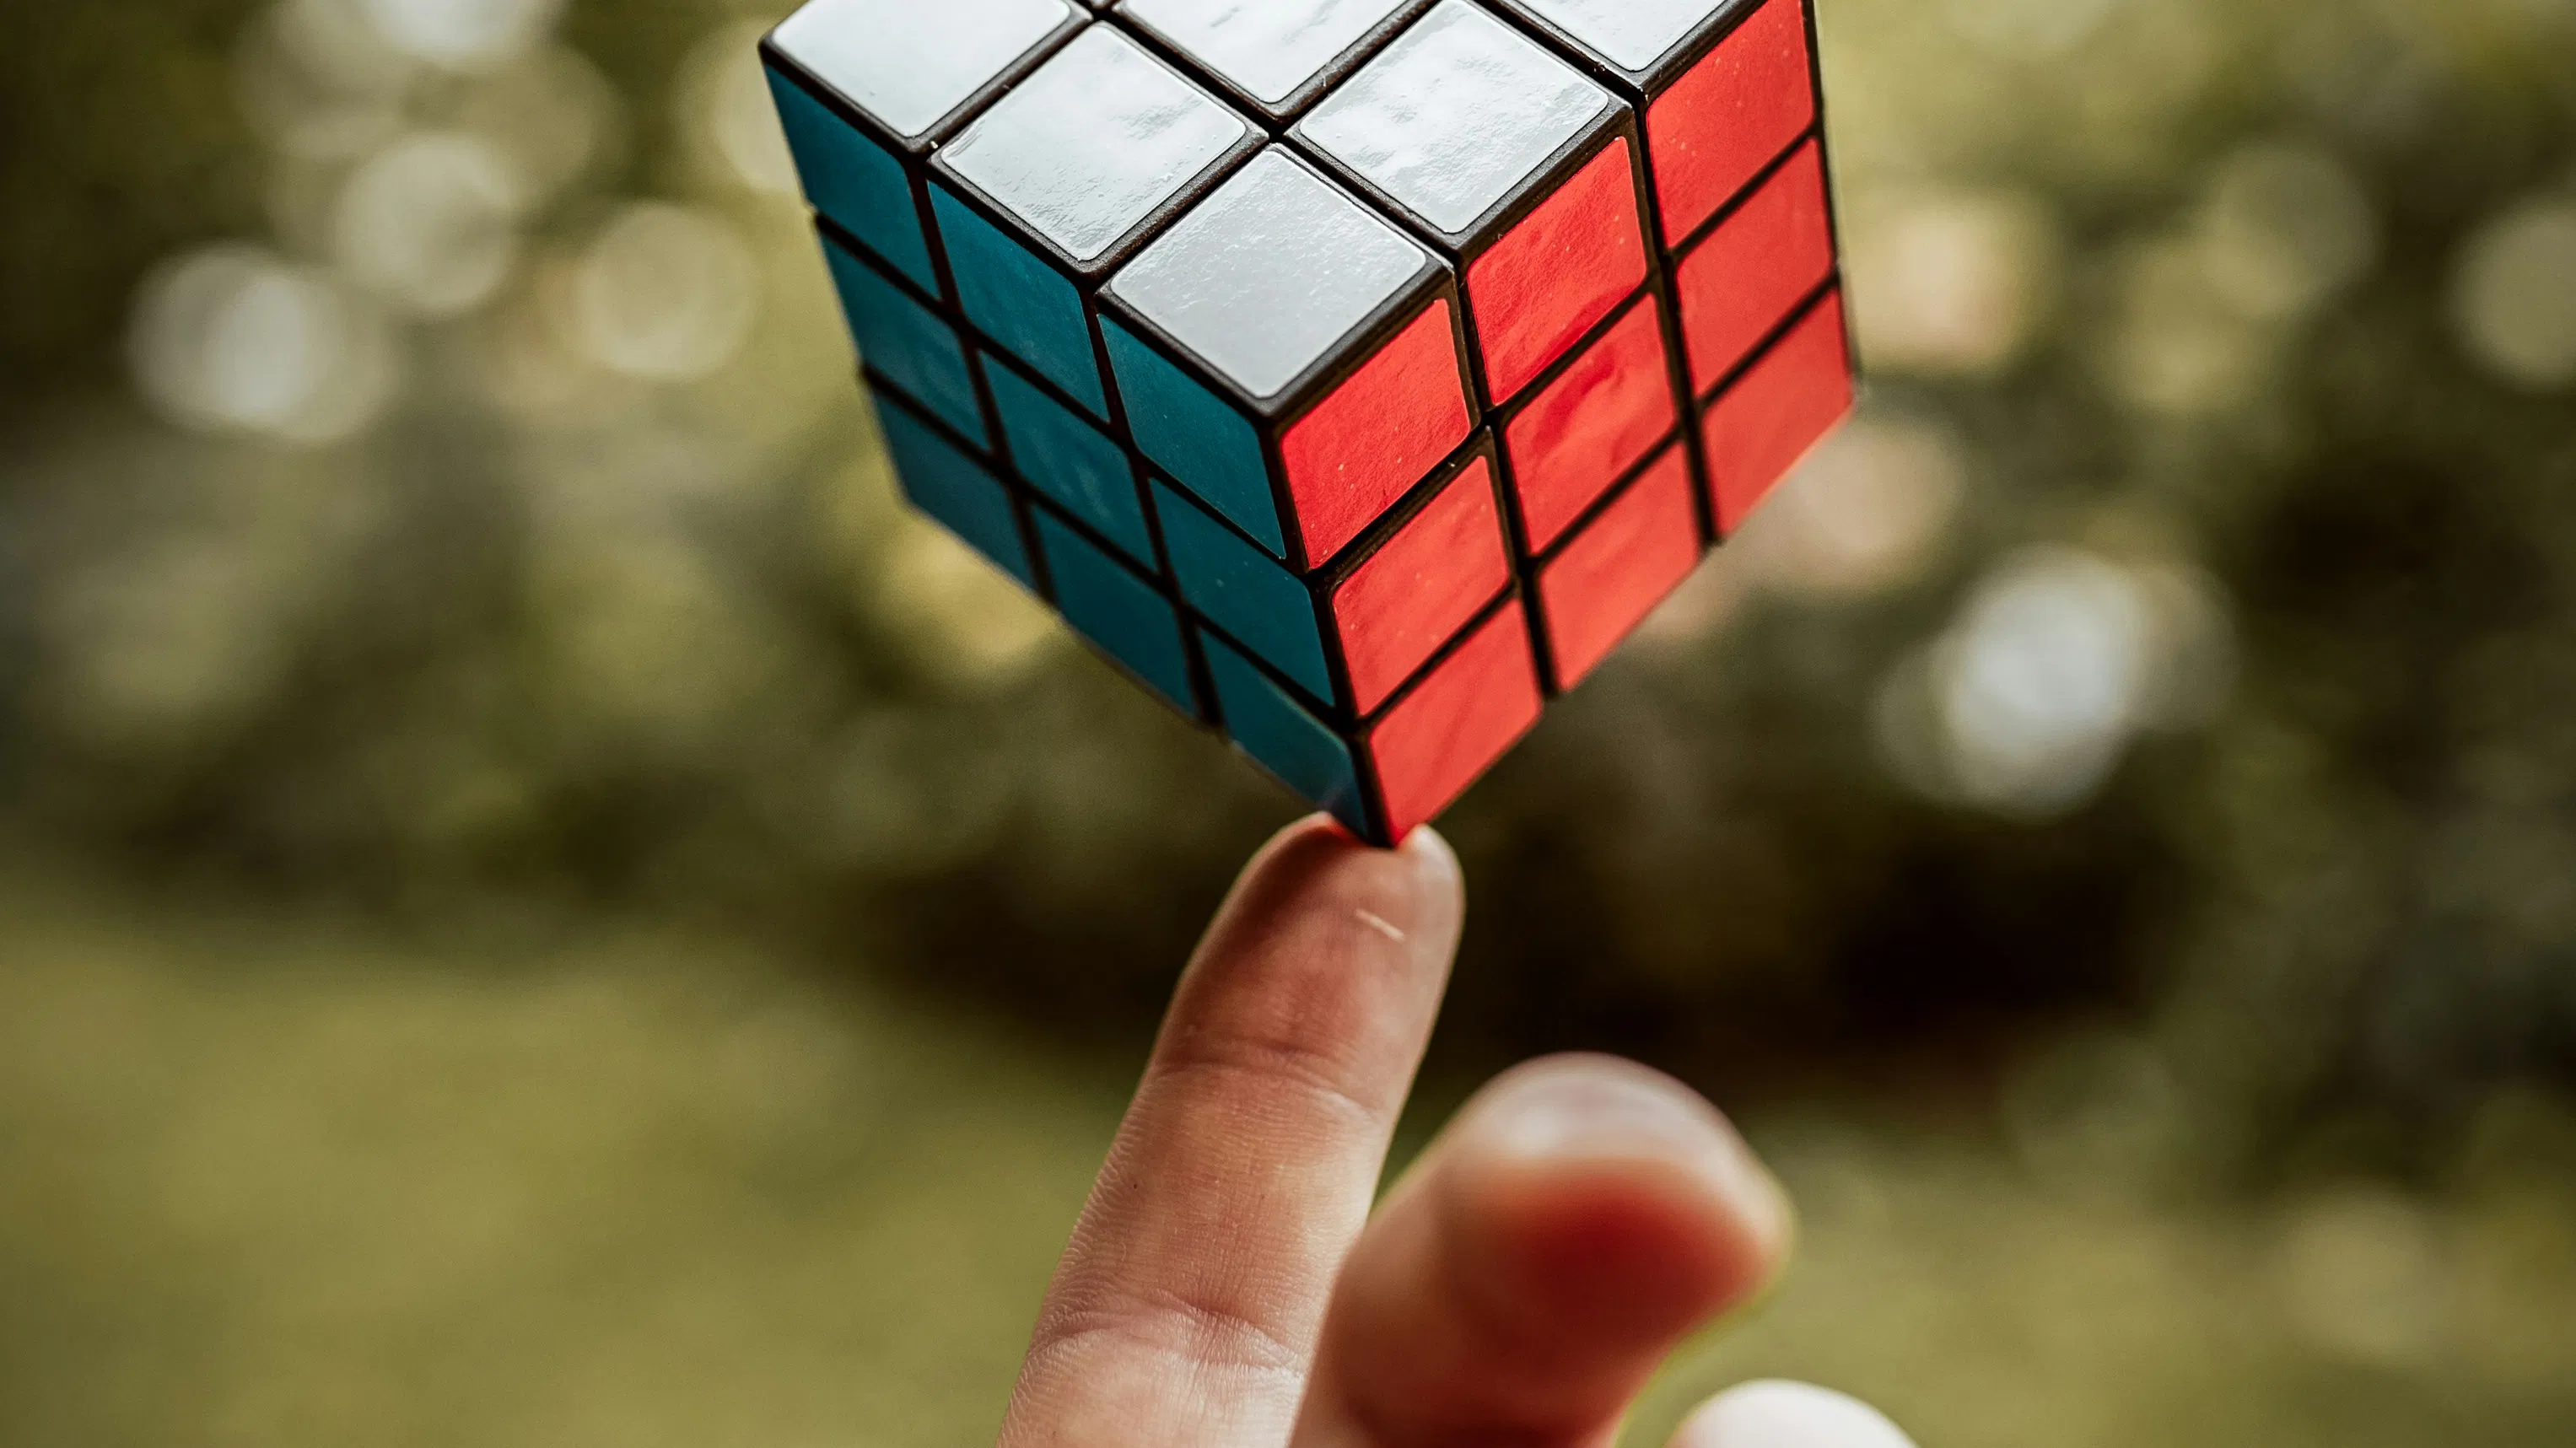 Rubiks kubus